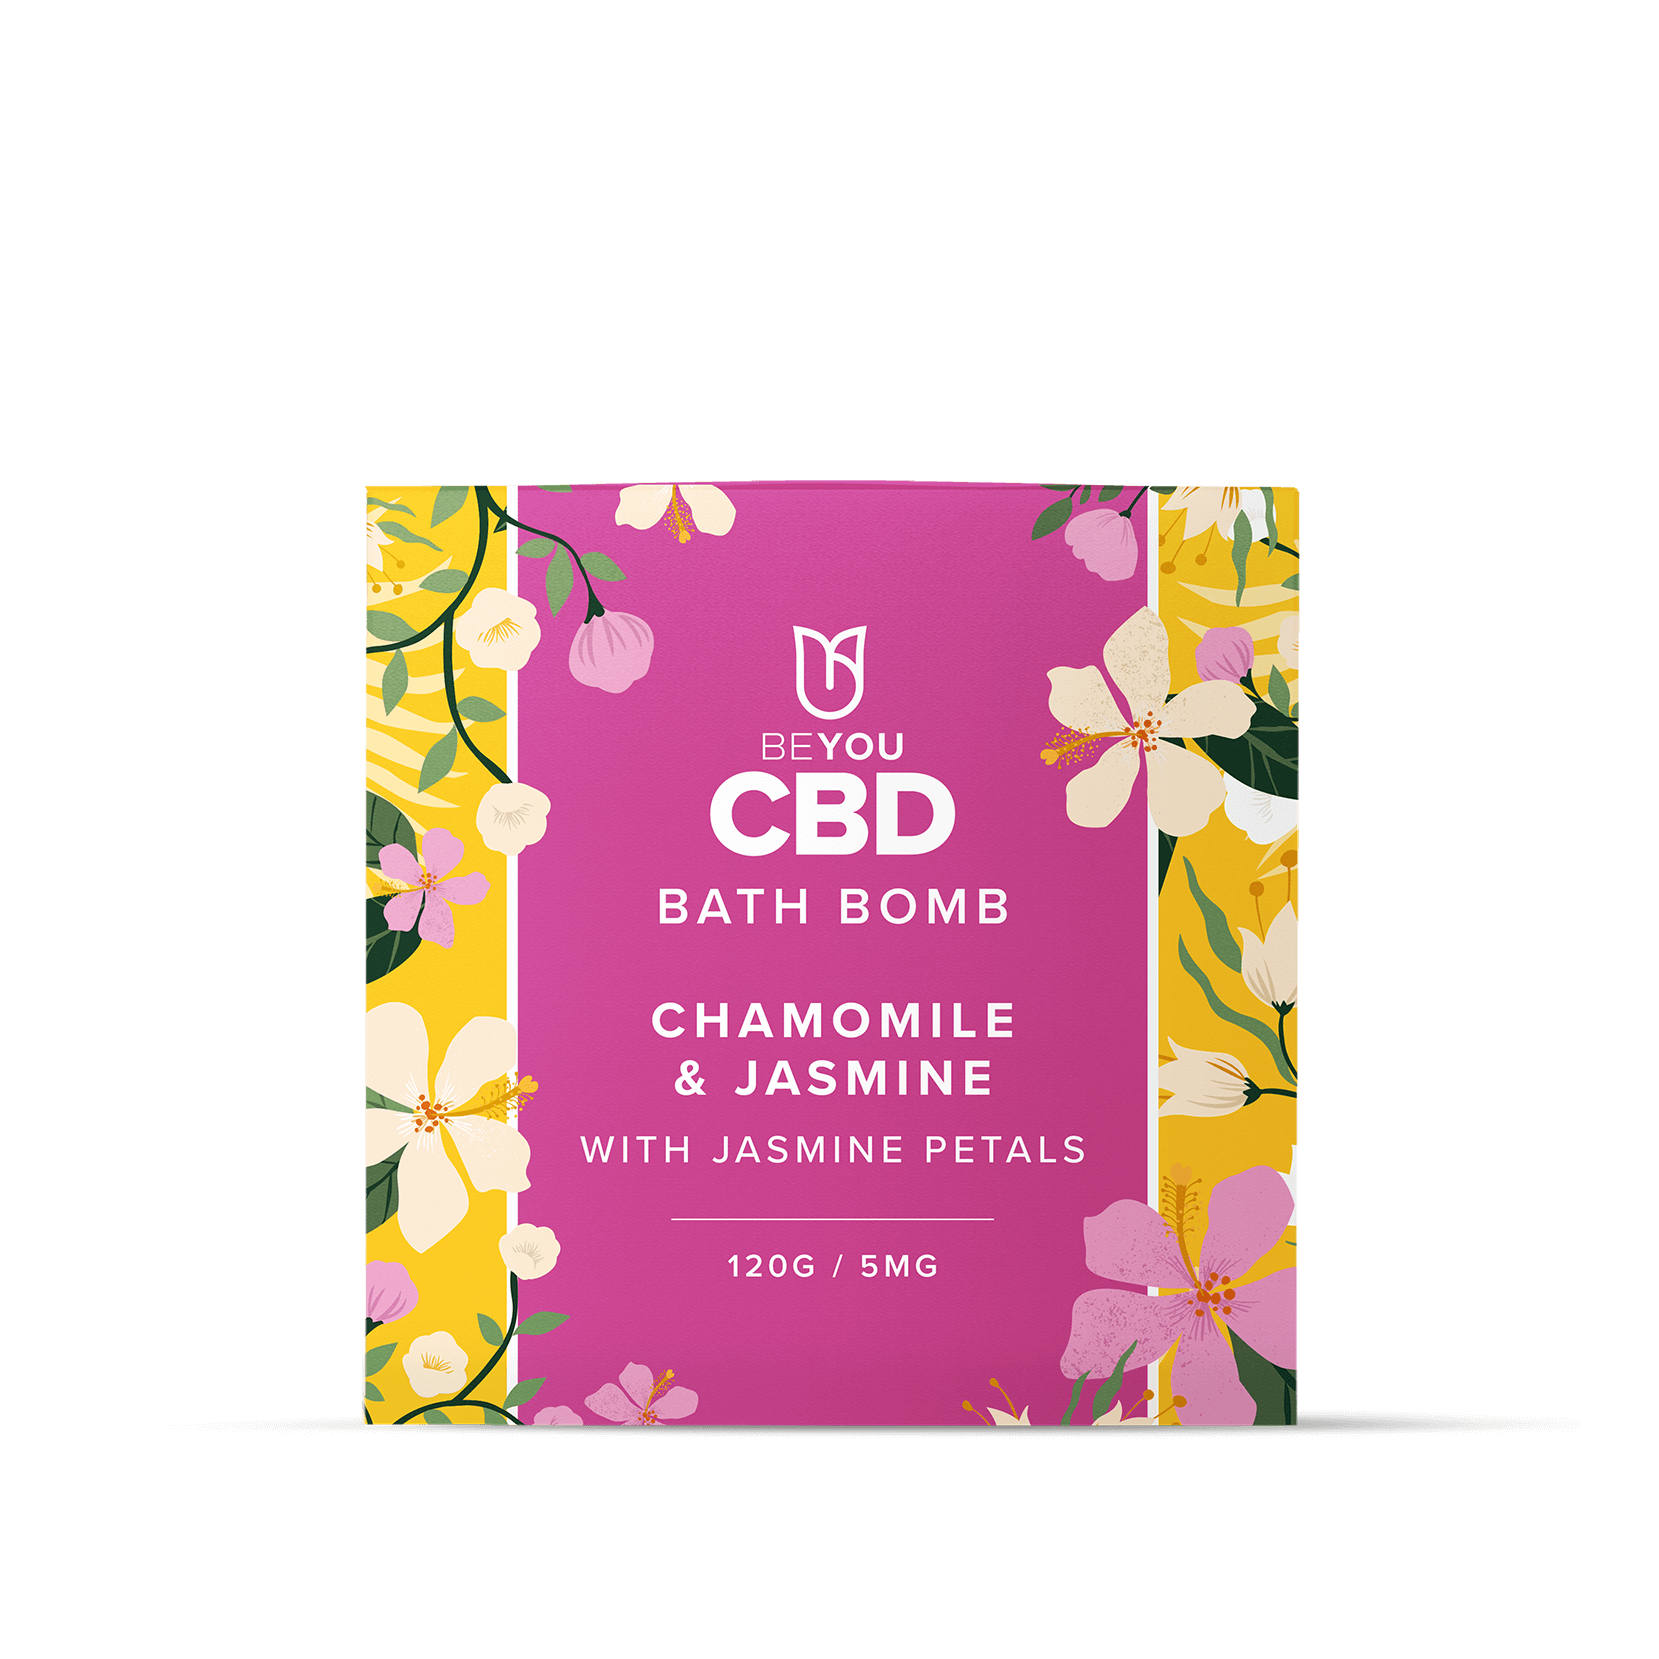 100% natural and pure CBD bath bomb with chamomile essential oil, jasmine essential oil and jasmine petals